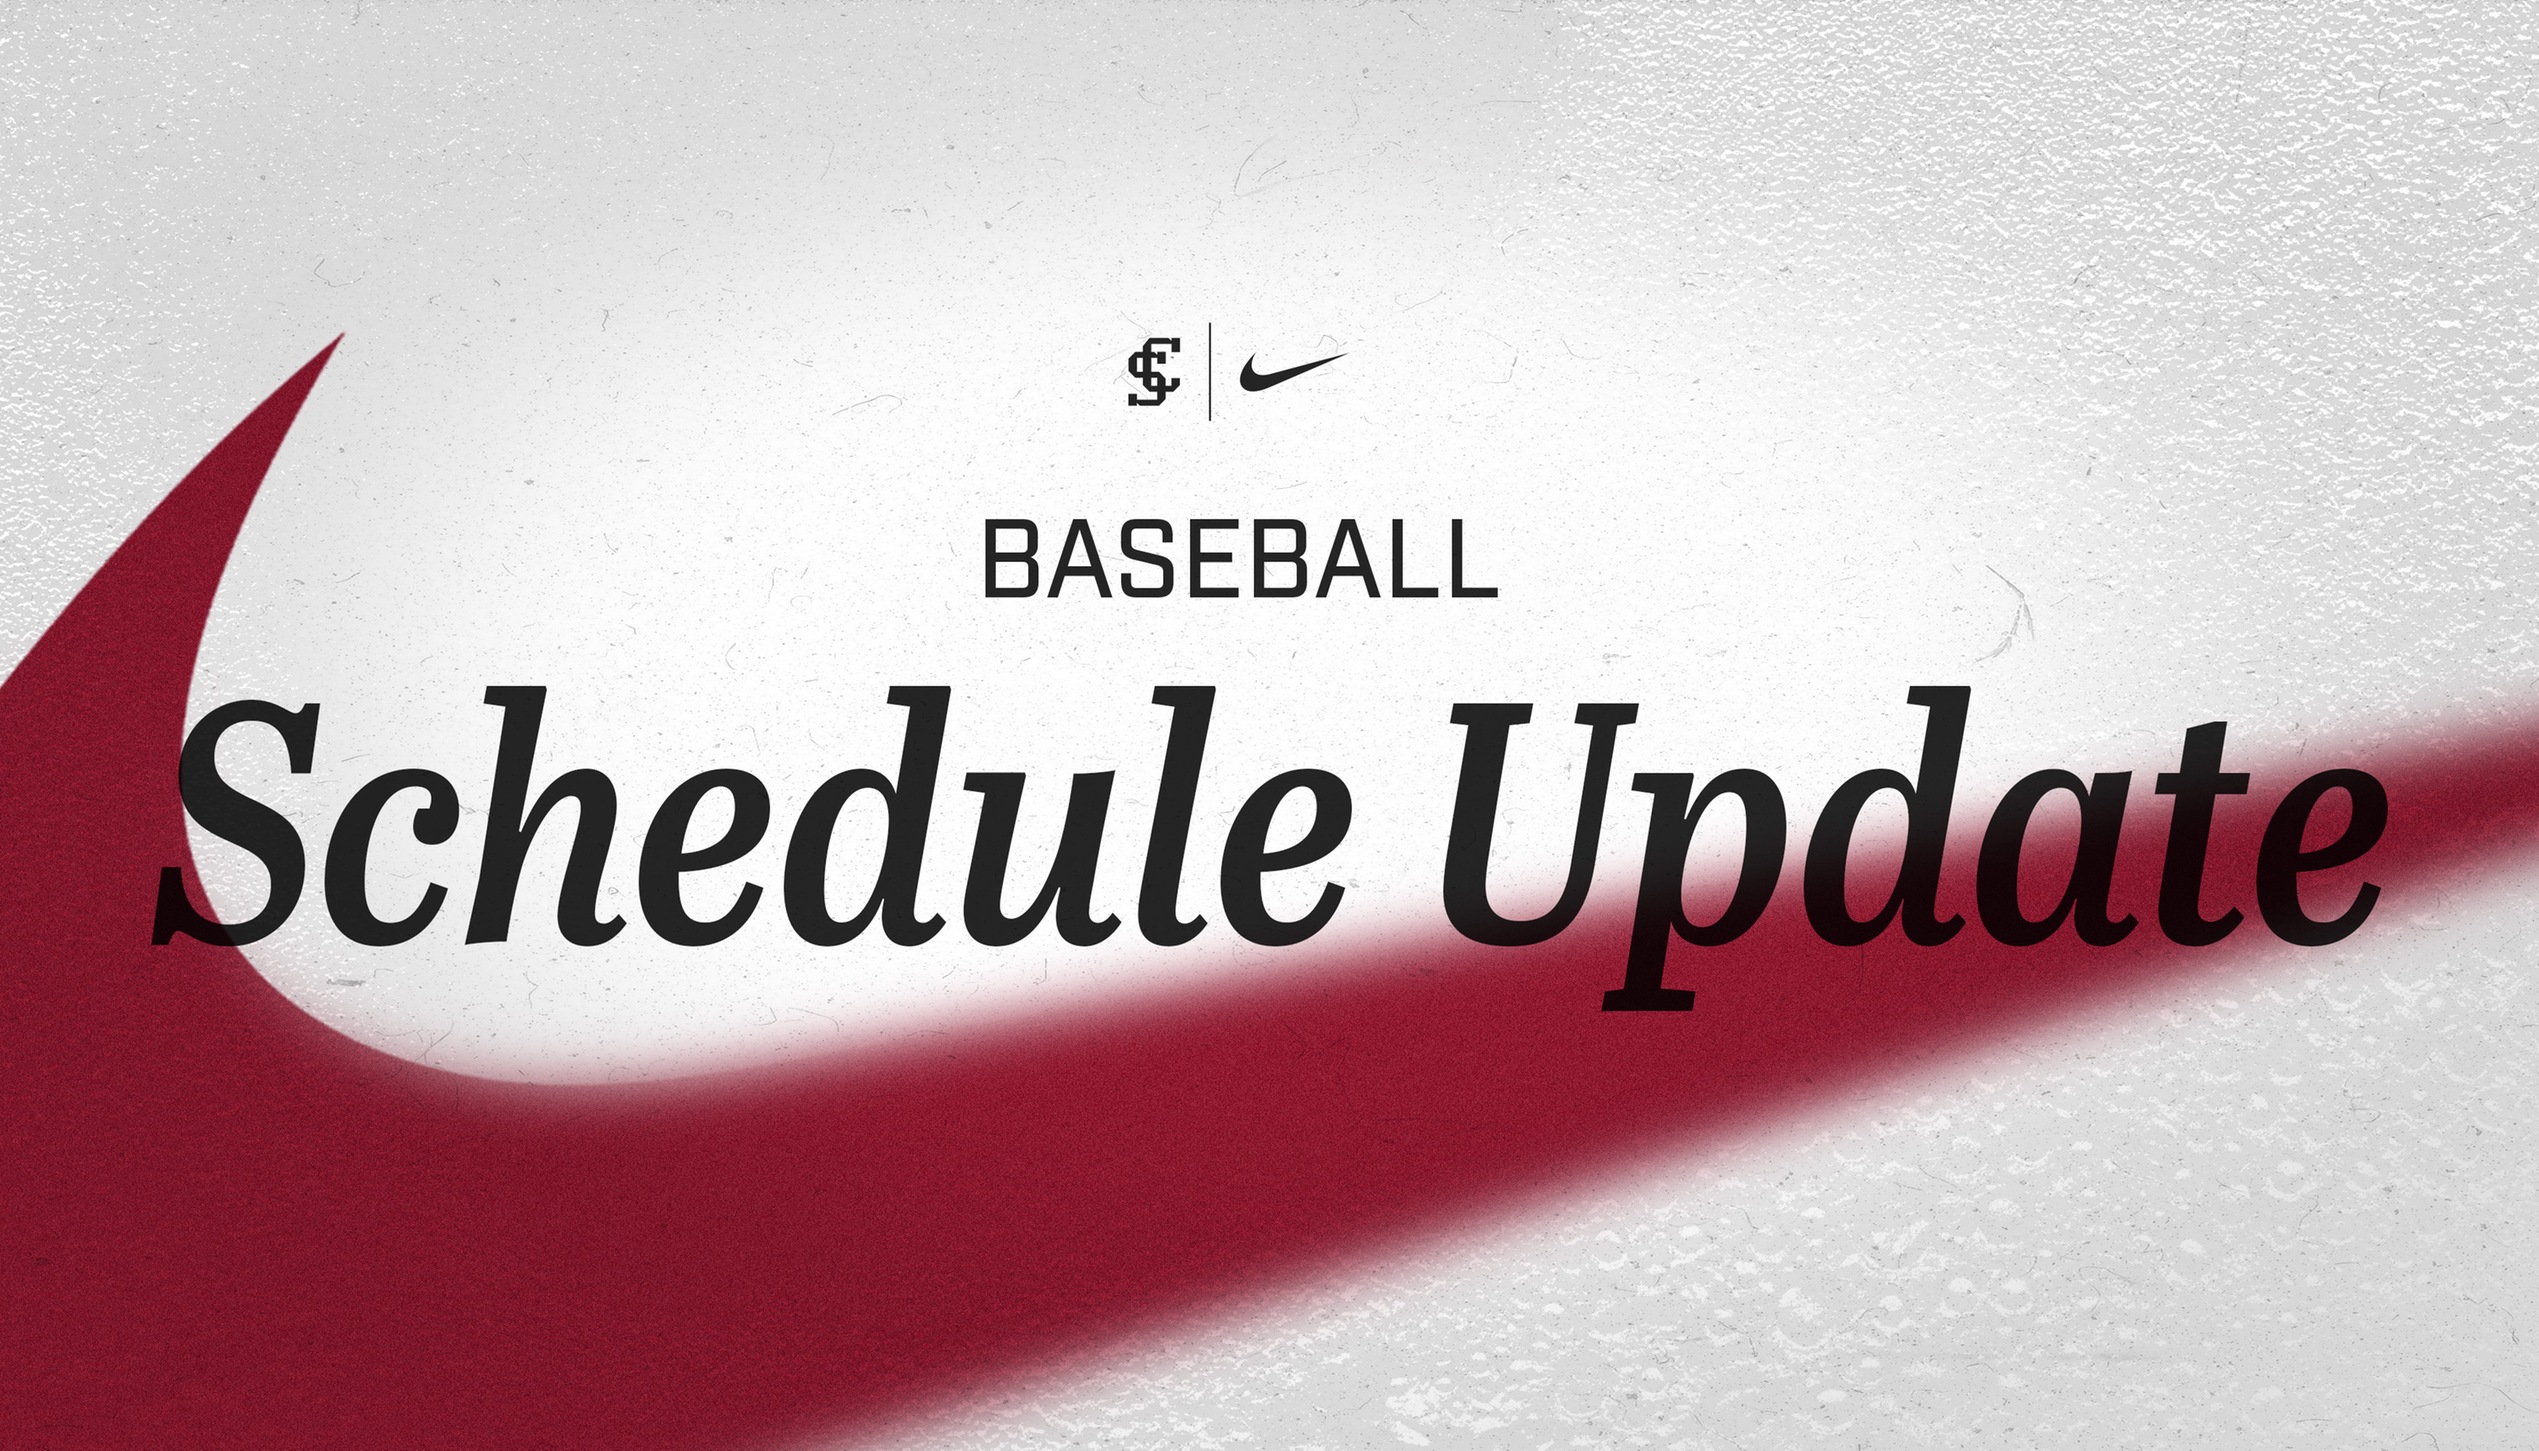 Baseball's Midweek Game at Cal Canceled